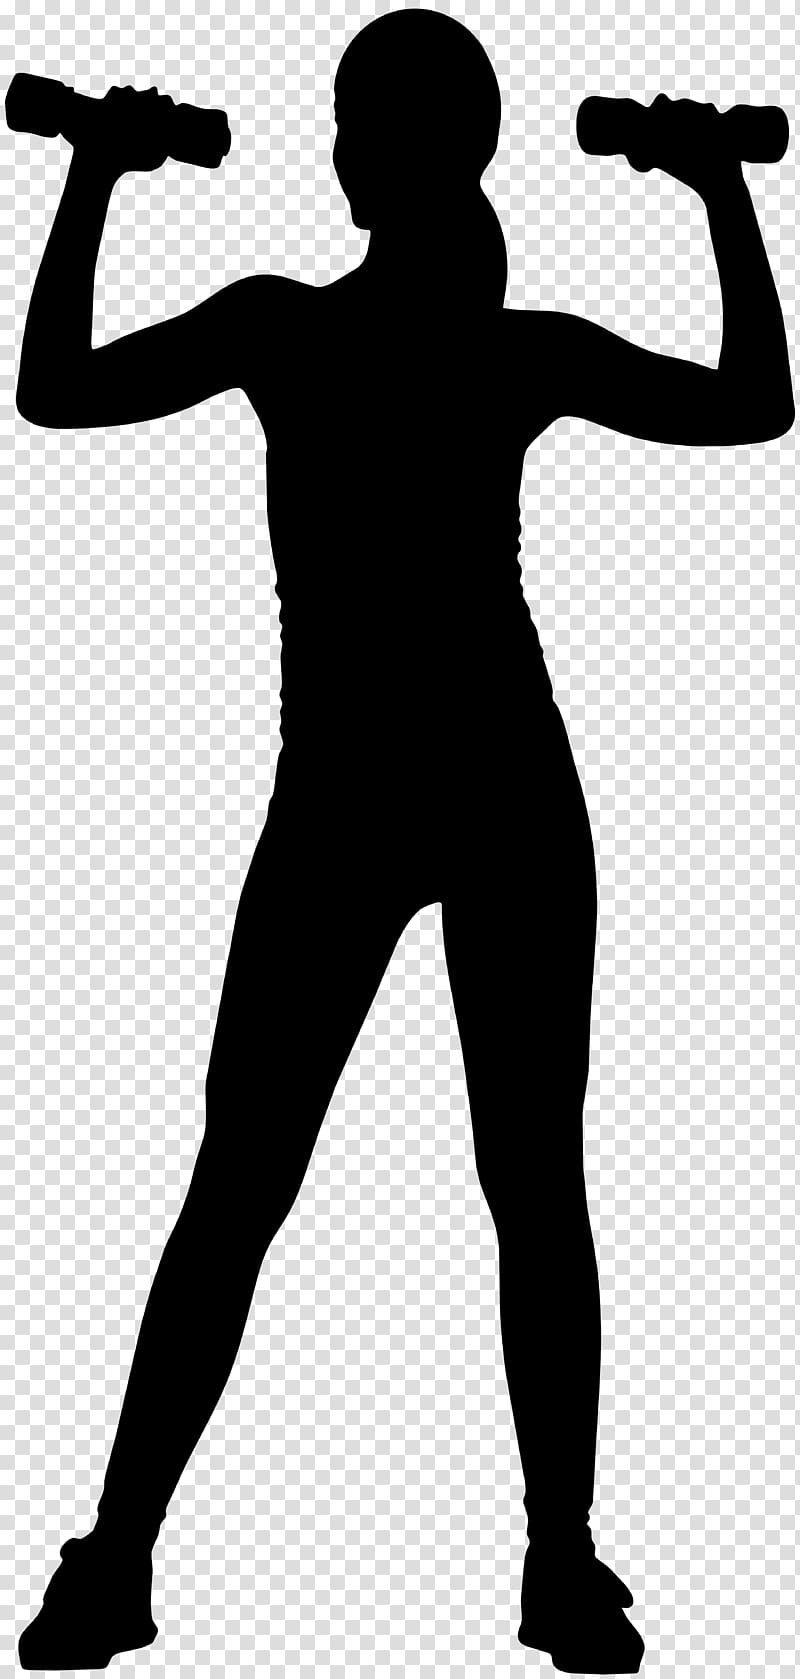 Dumbbell clipart girl workout. Woman holding dumbbells illustration